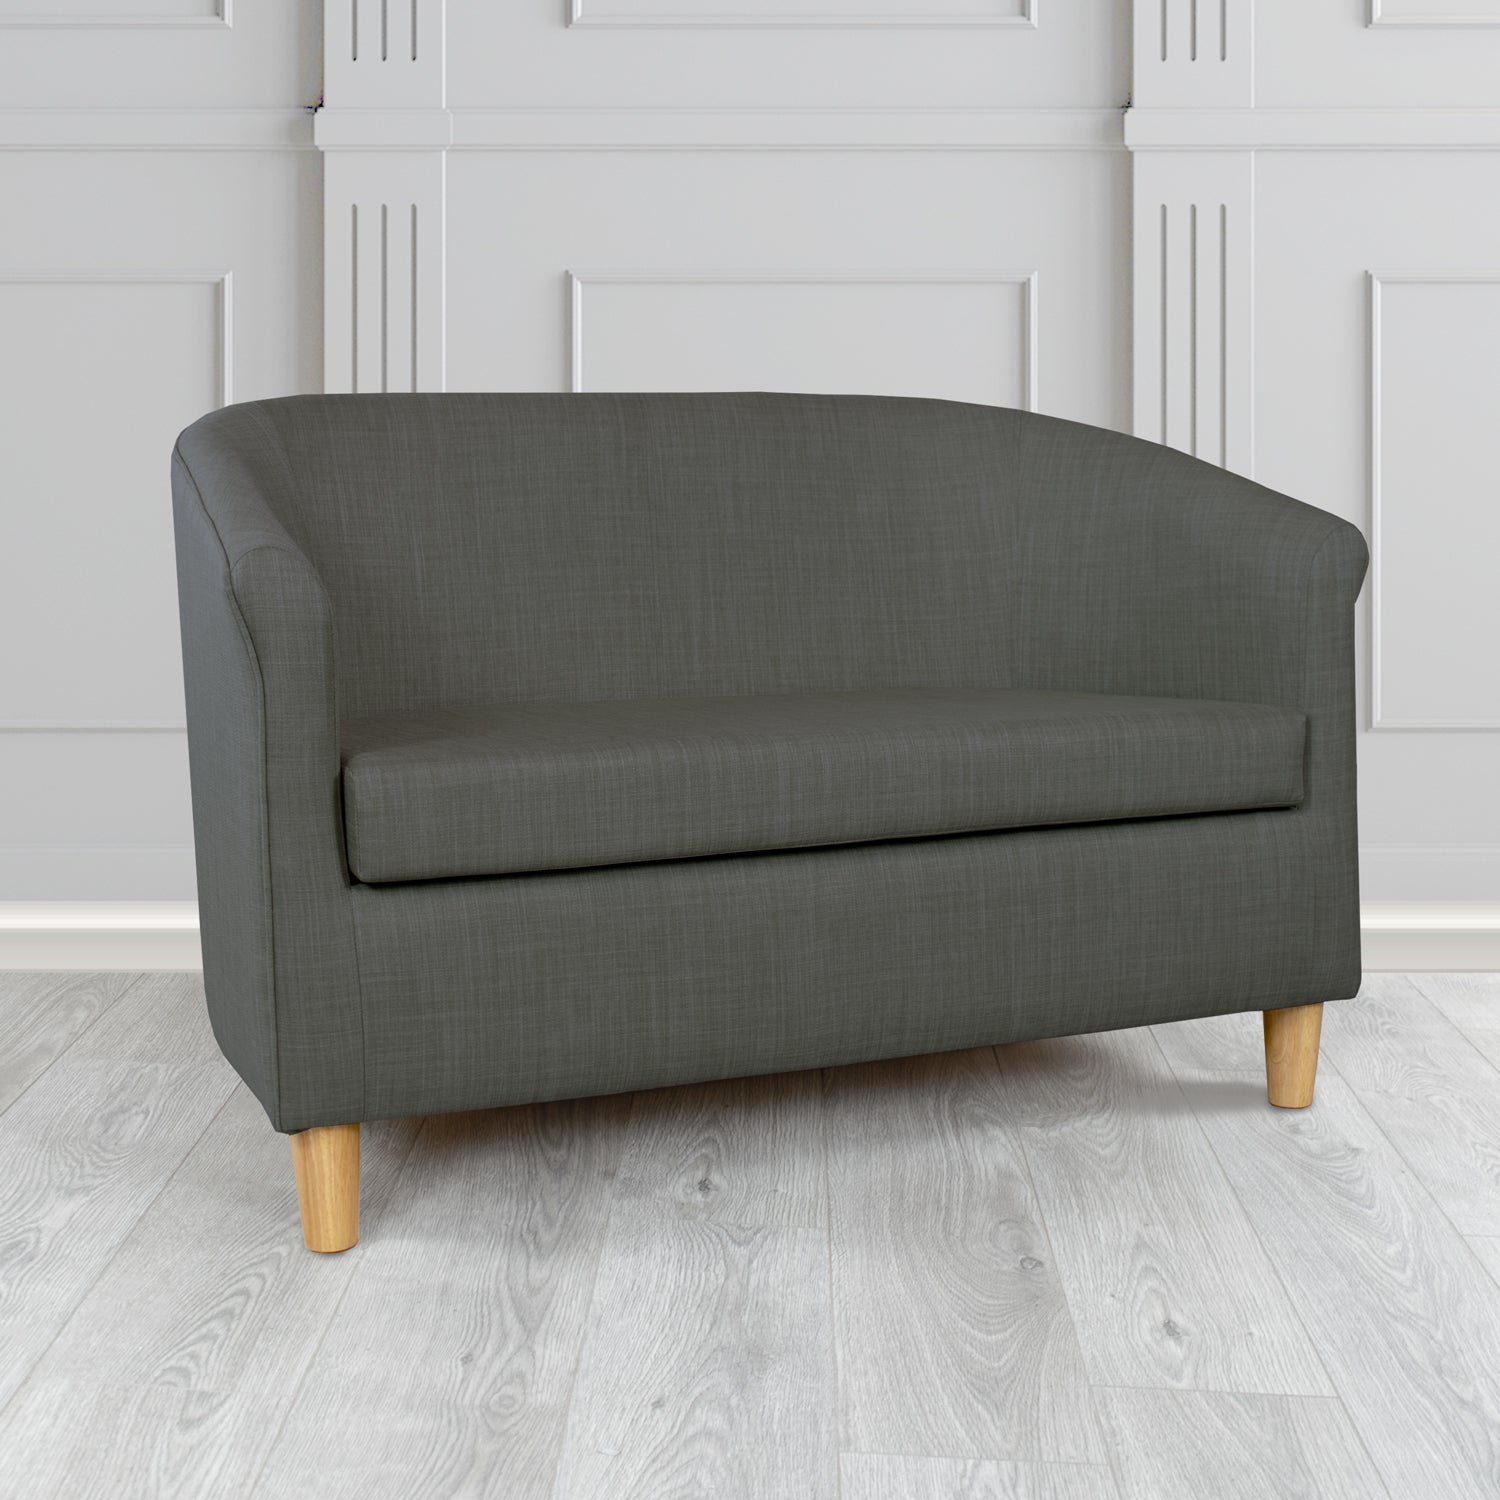 Tuscany Charles Charcoal Plain Linen Fabric 2 Seater Tub Sofa - The Tub Chair Shop